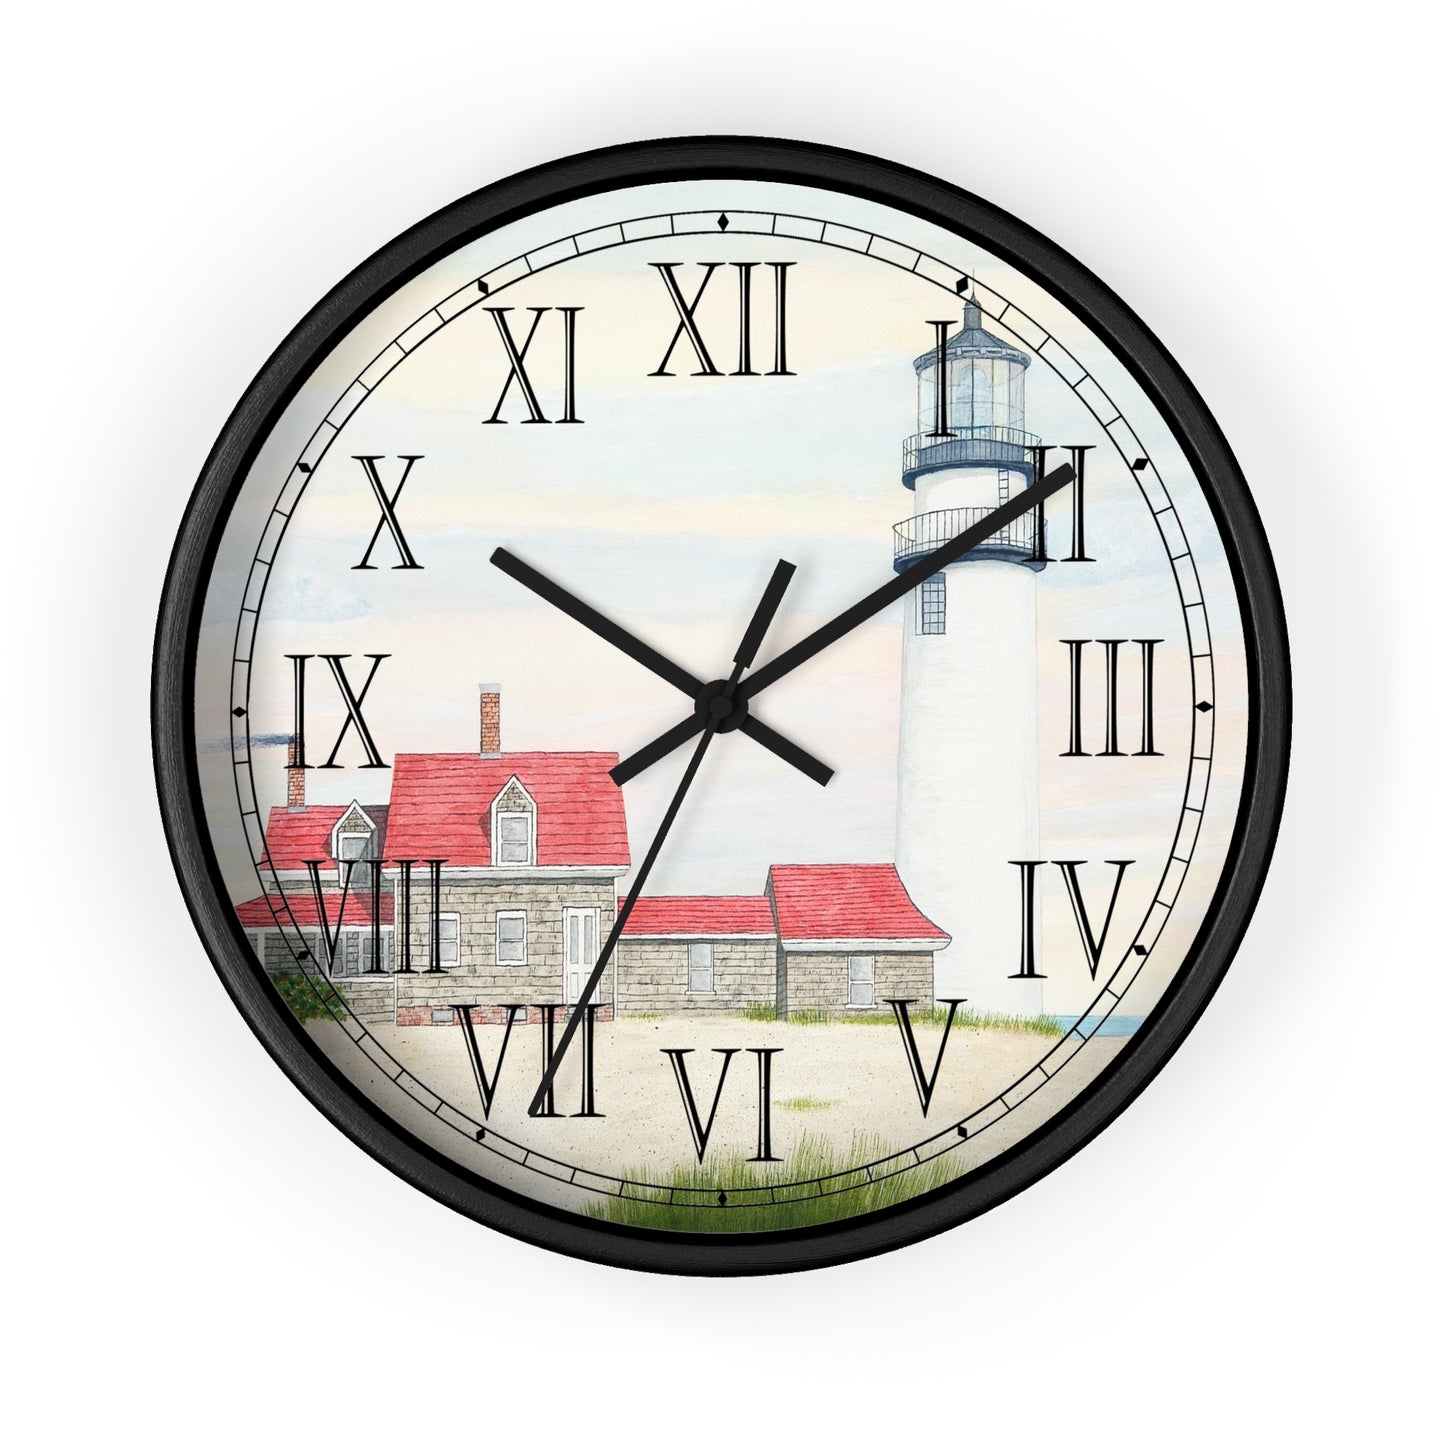 Stiff Breeze At Day's End Roman Numeral Clock